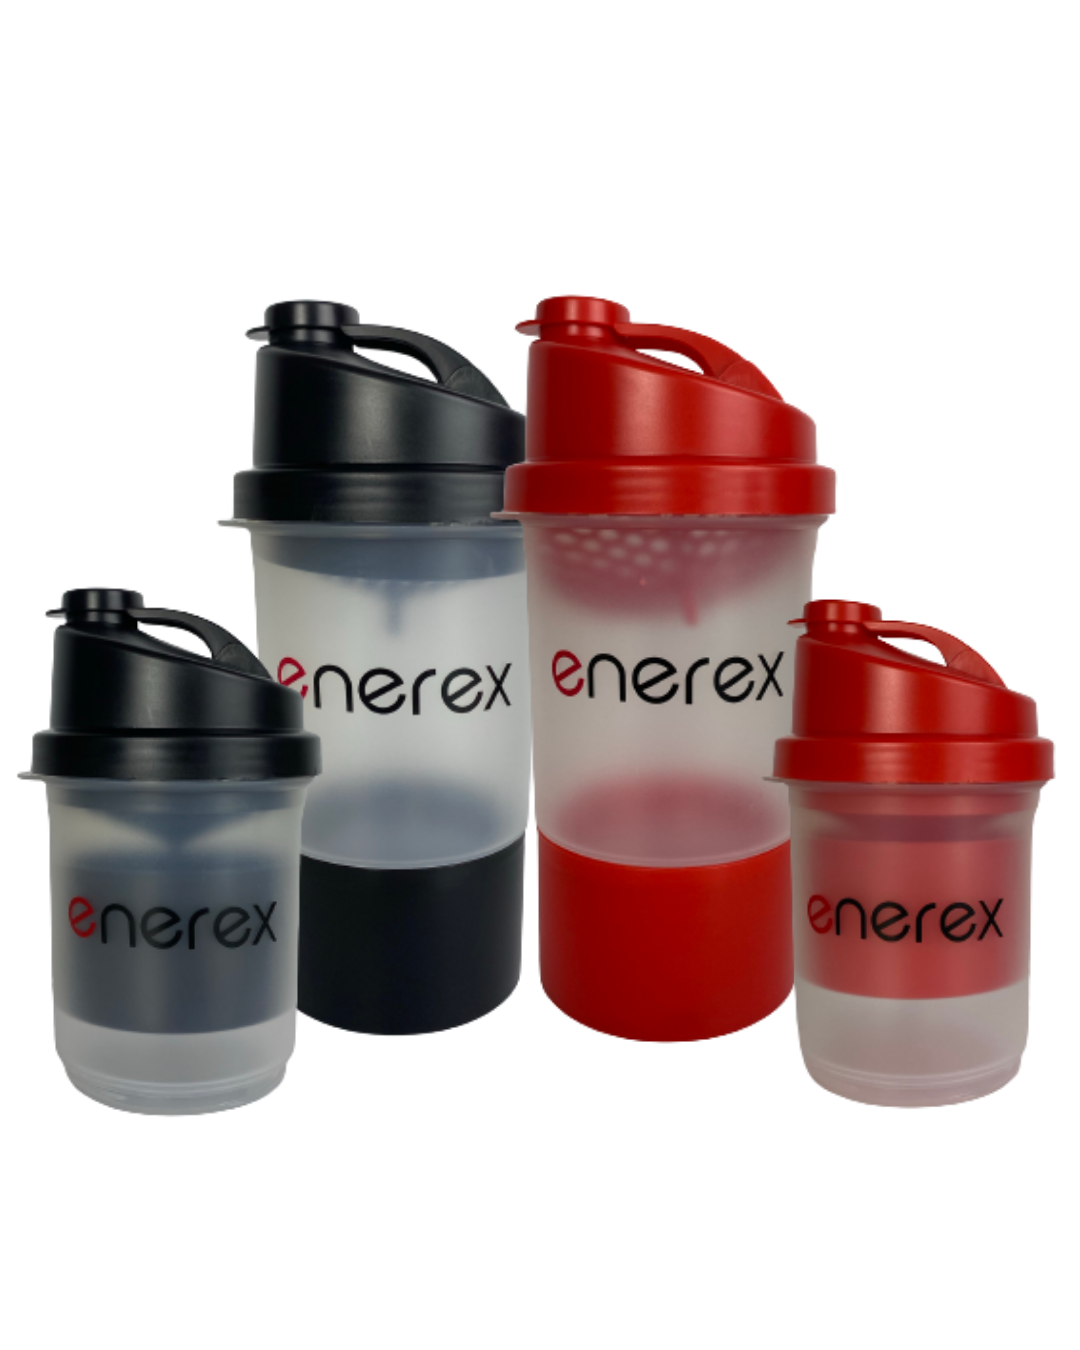 Enerex.ca • SHAKER CUP 400ml • Best Deals On Health & Wellness Supplements, Vitamins & More
